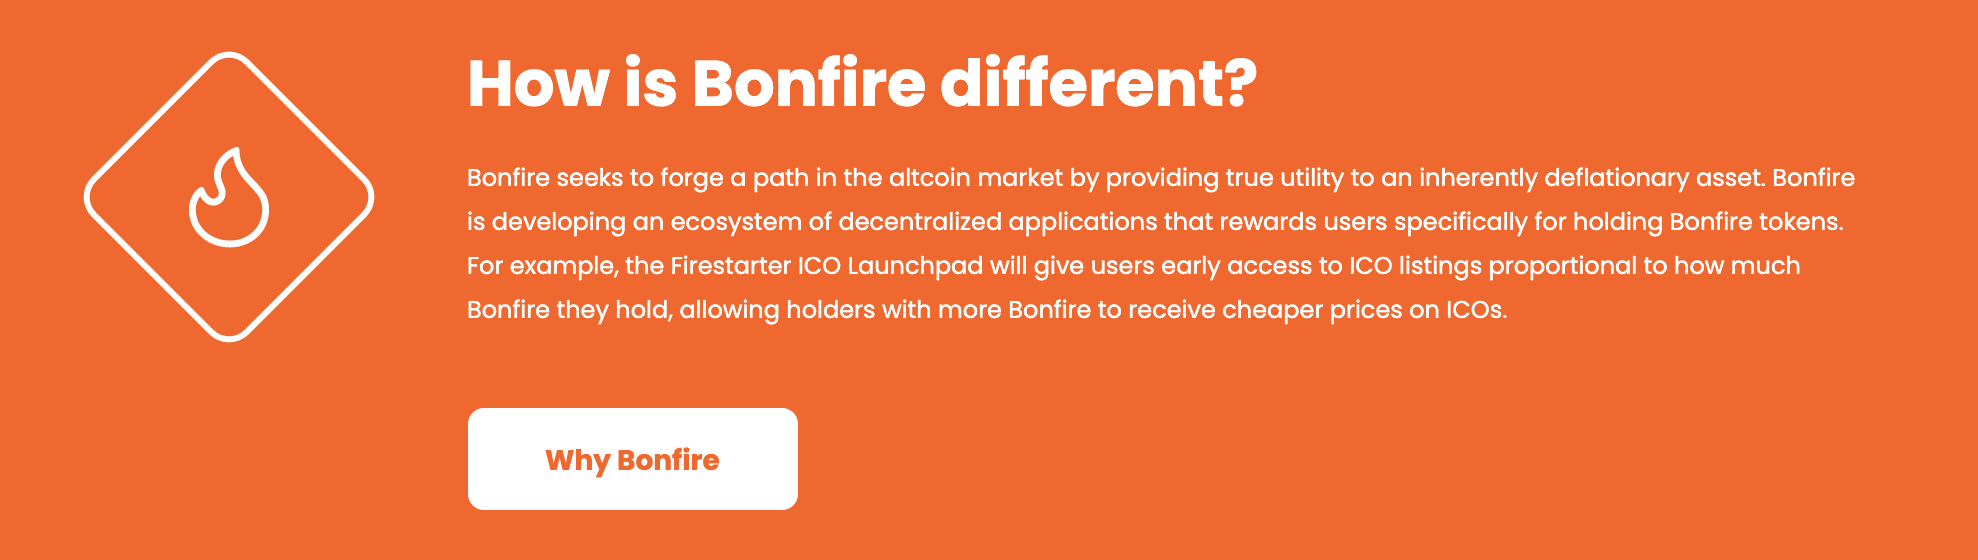 bonfire tokenomics